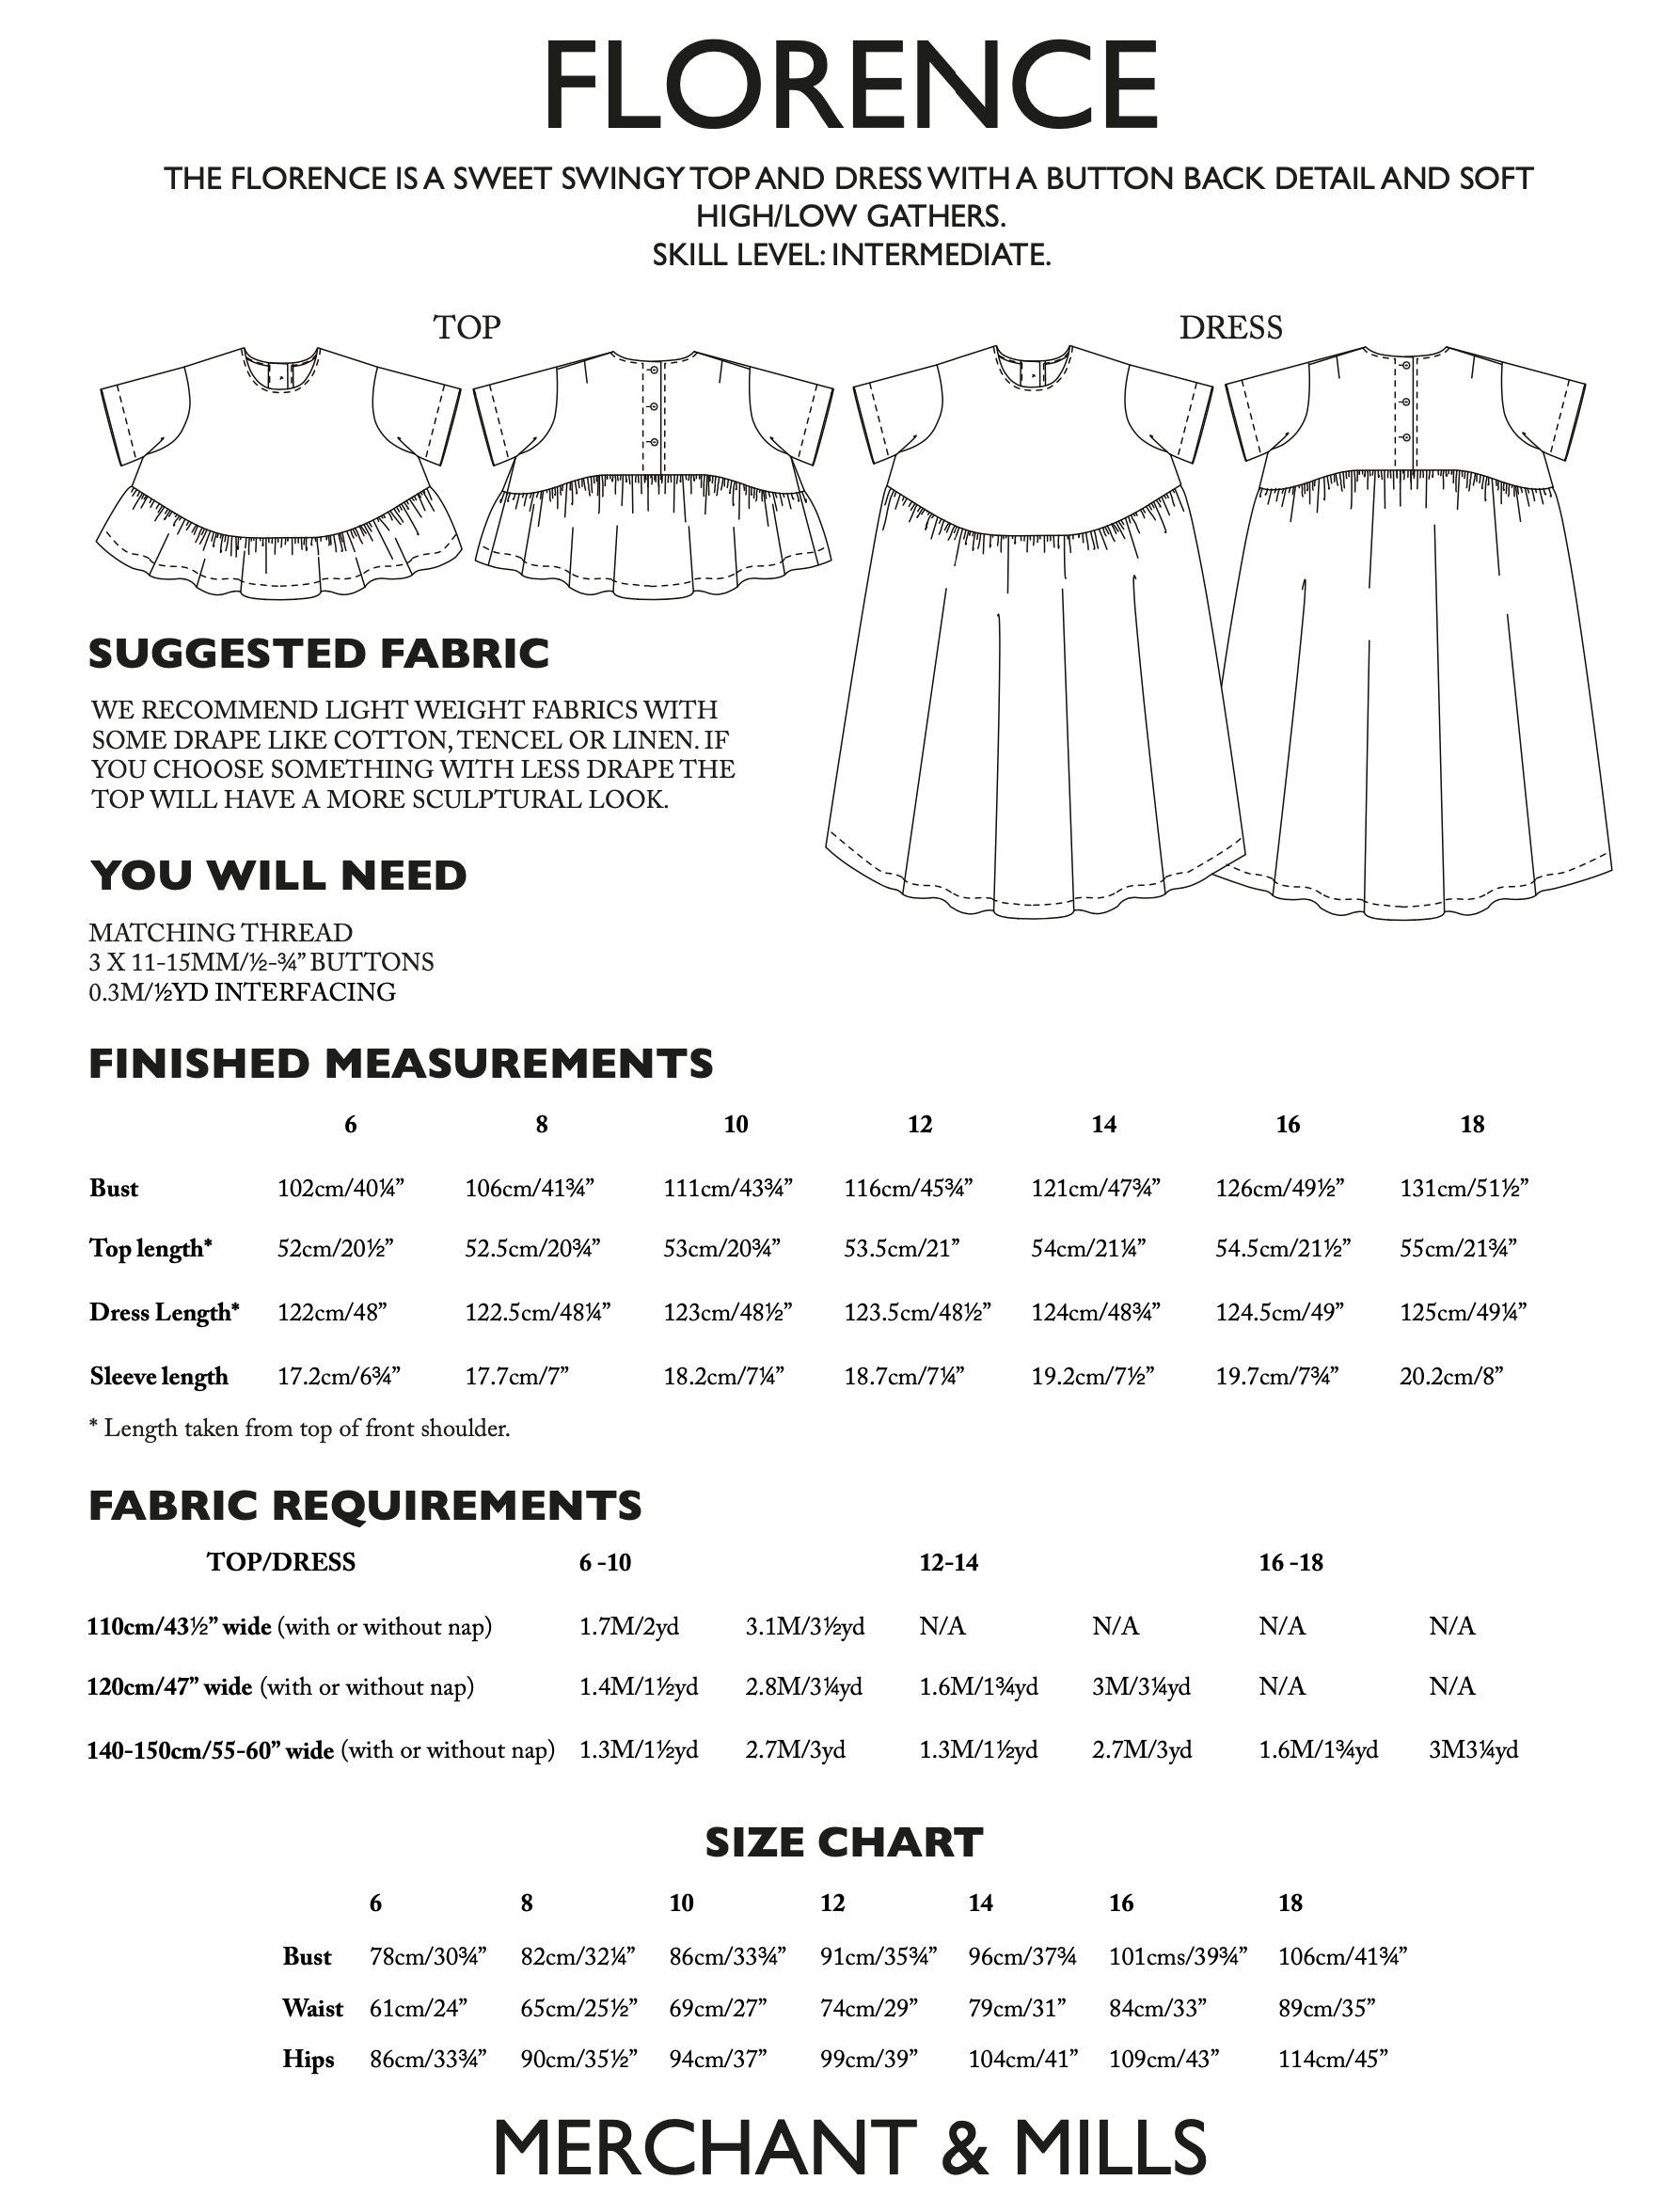 Merchant & Mills Florence Top and Dress